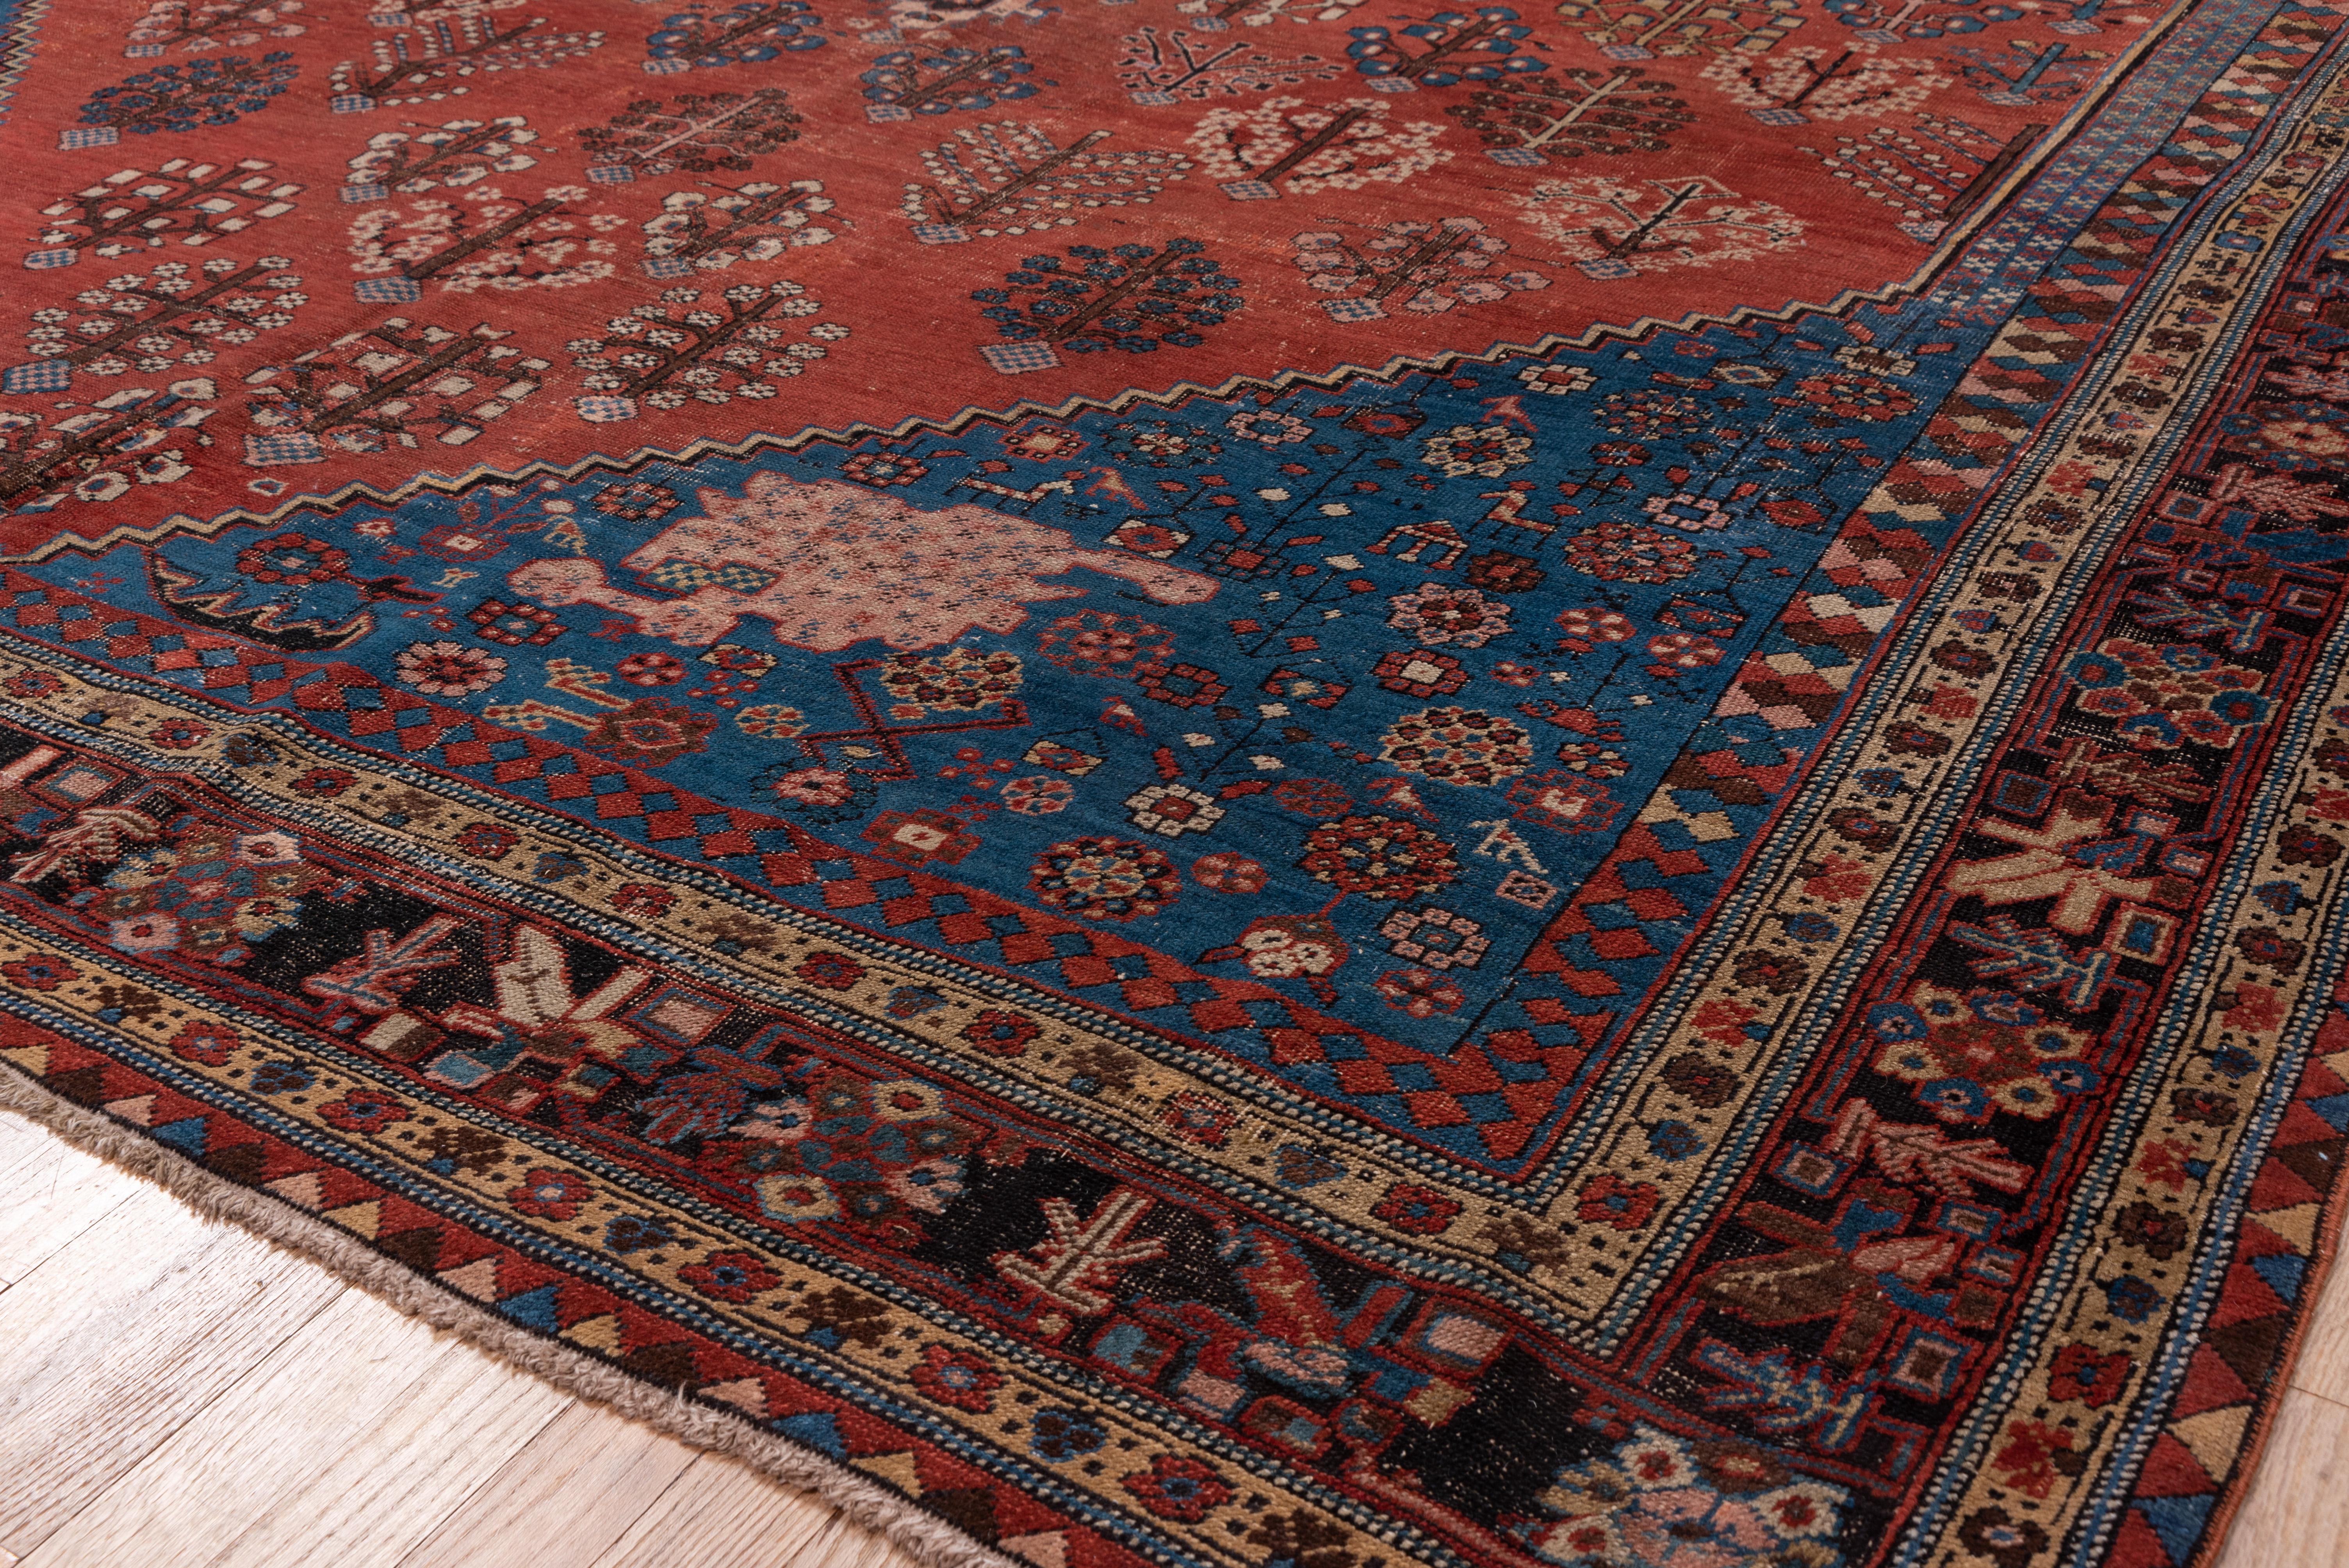 Heriz Serapi Authentic Persian Bakhshayesh Carpet, Amazing Colors, Zanabaki Border